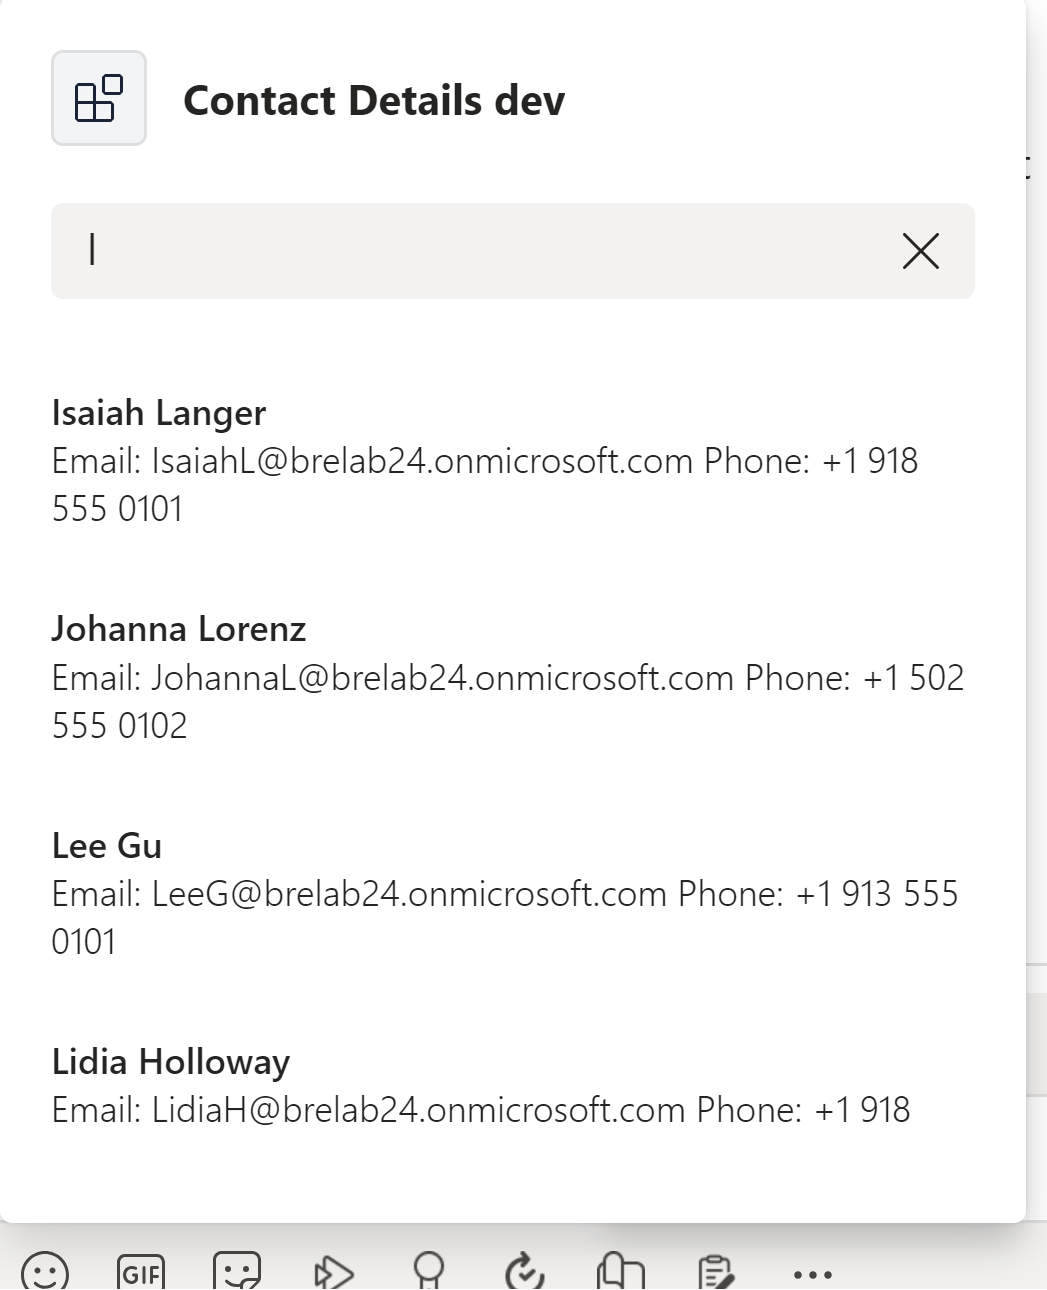 Screenshot of contact details app in Teams.